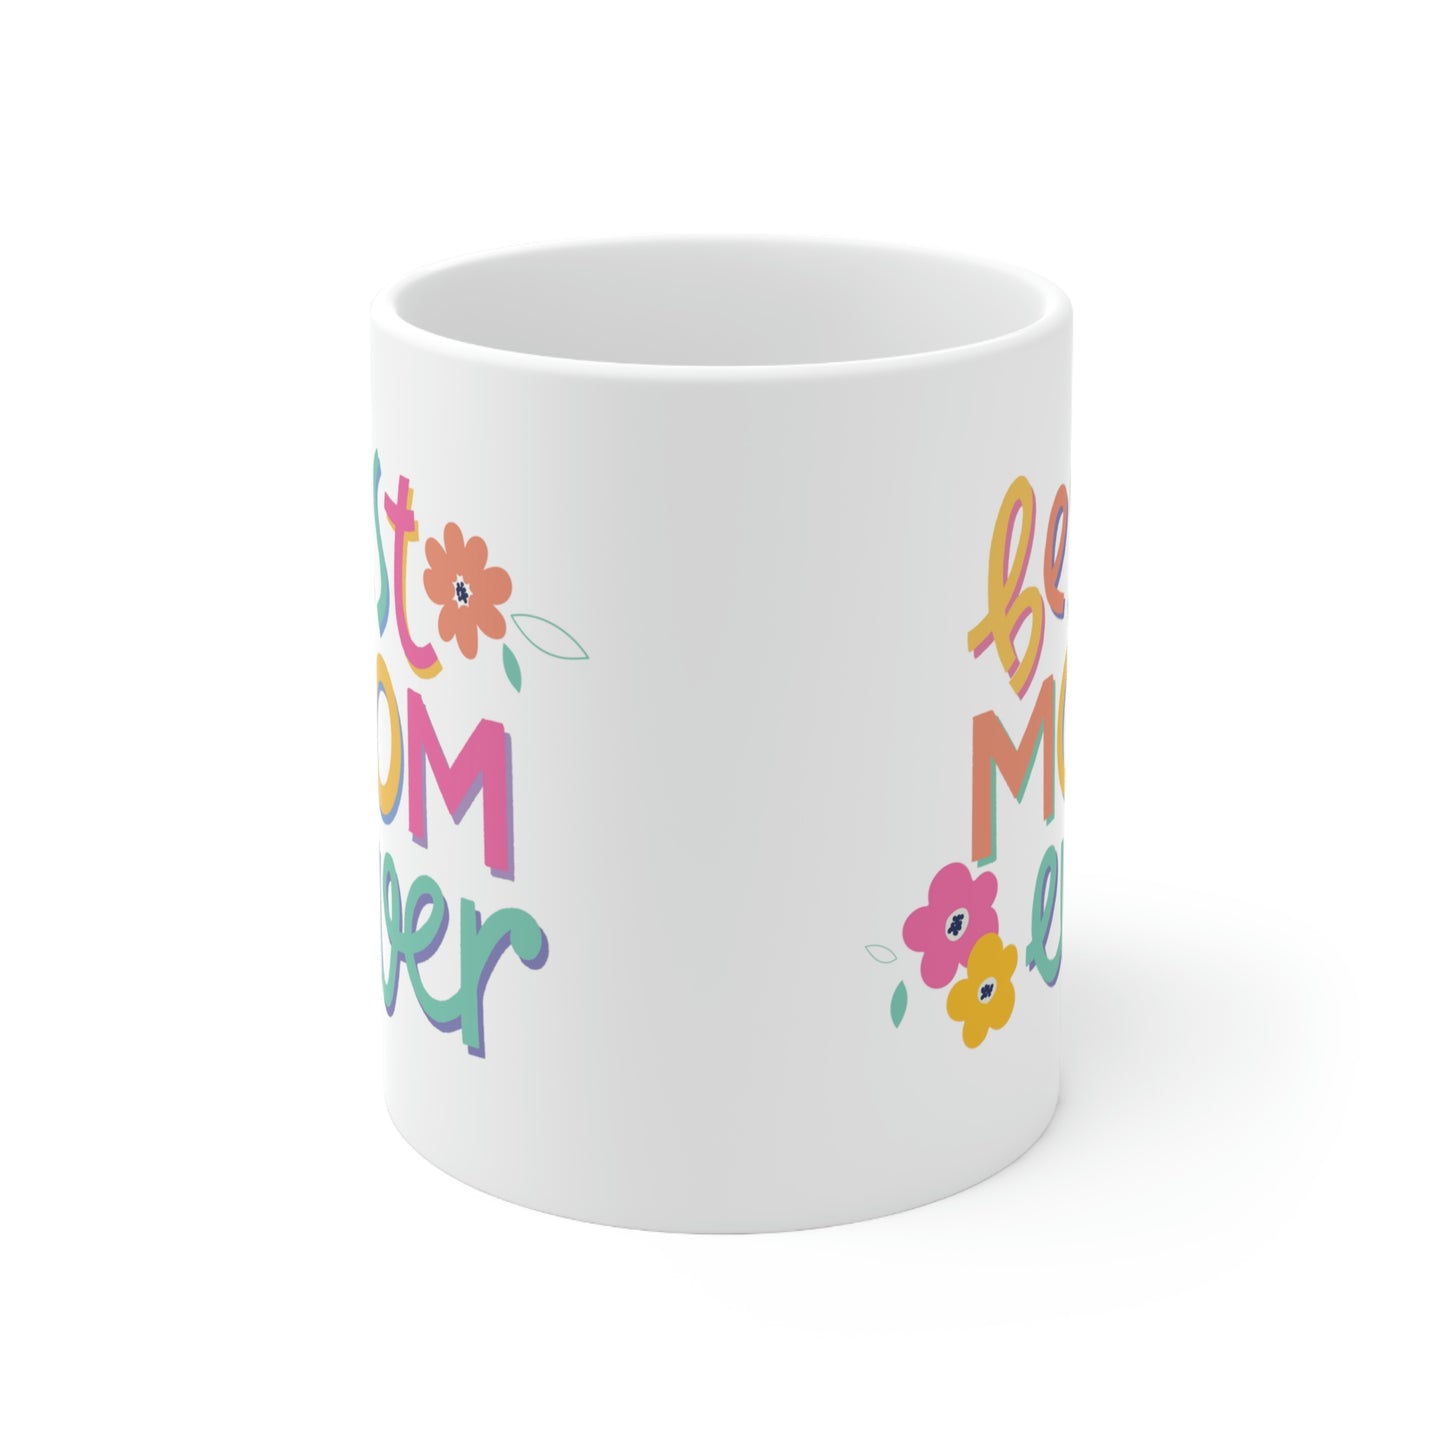 Best Mom Ever Ceramic Mug 11oz, Mothers Day Gift